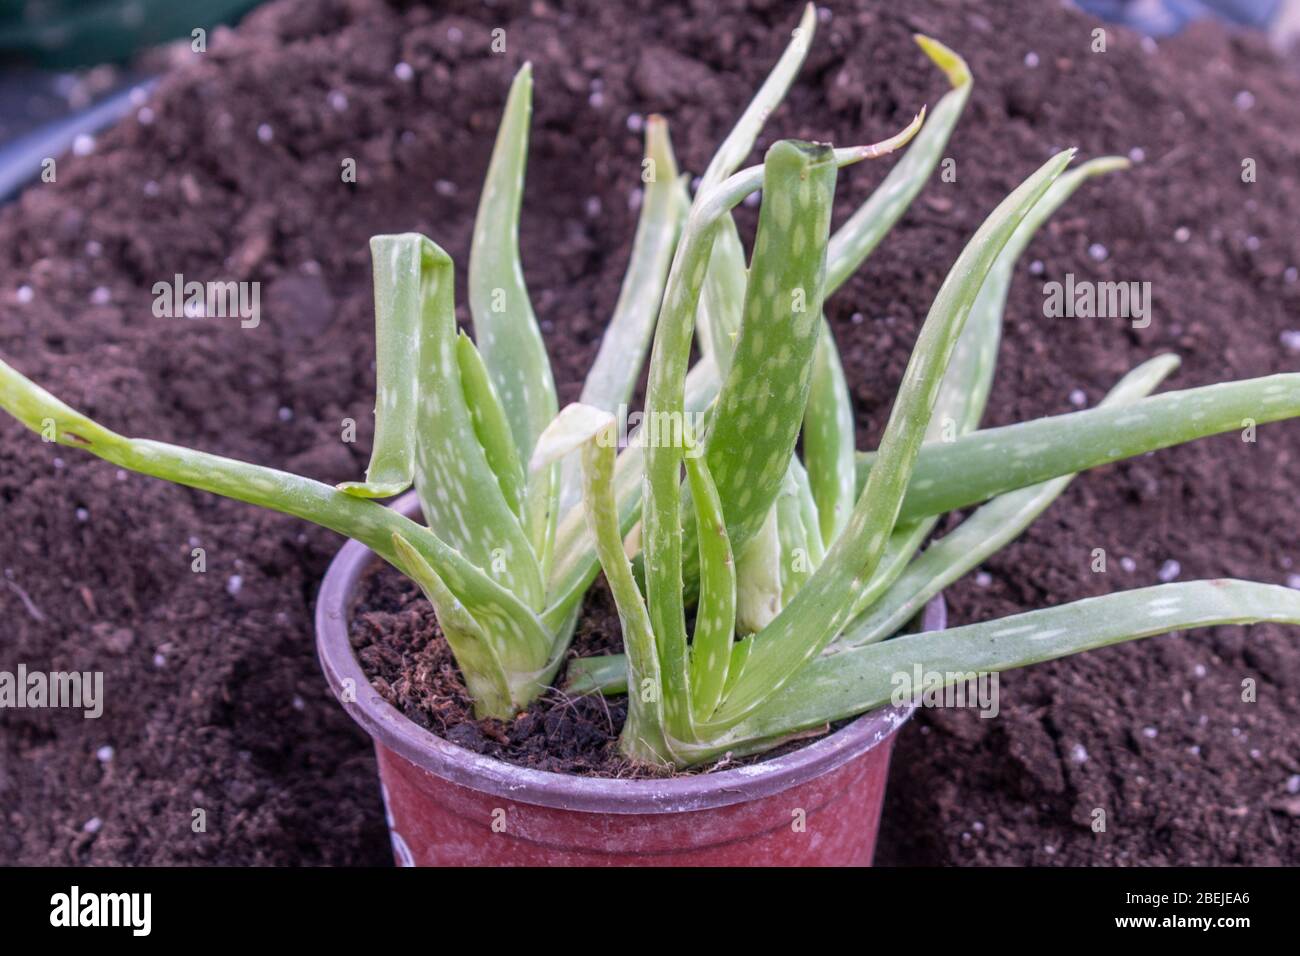 Young Aloe vera barbadensis miller seedling in pot Stock Photo